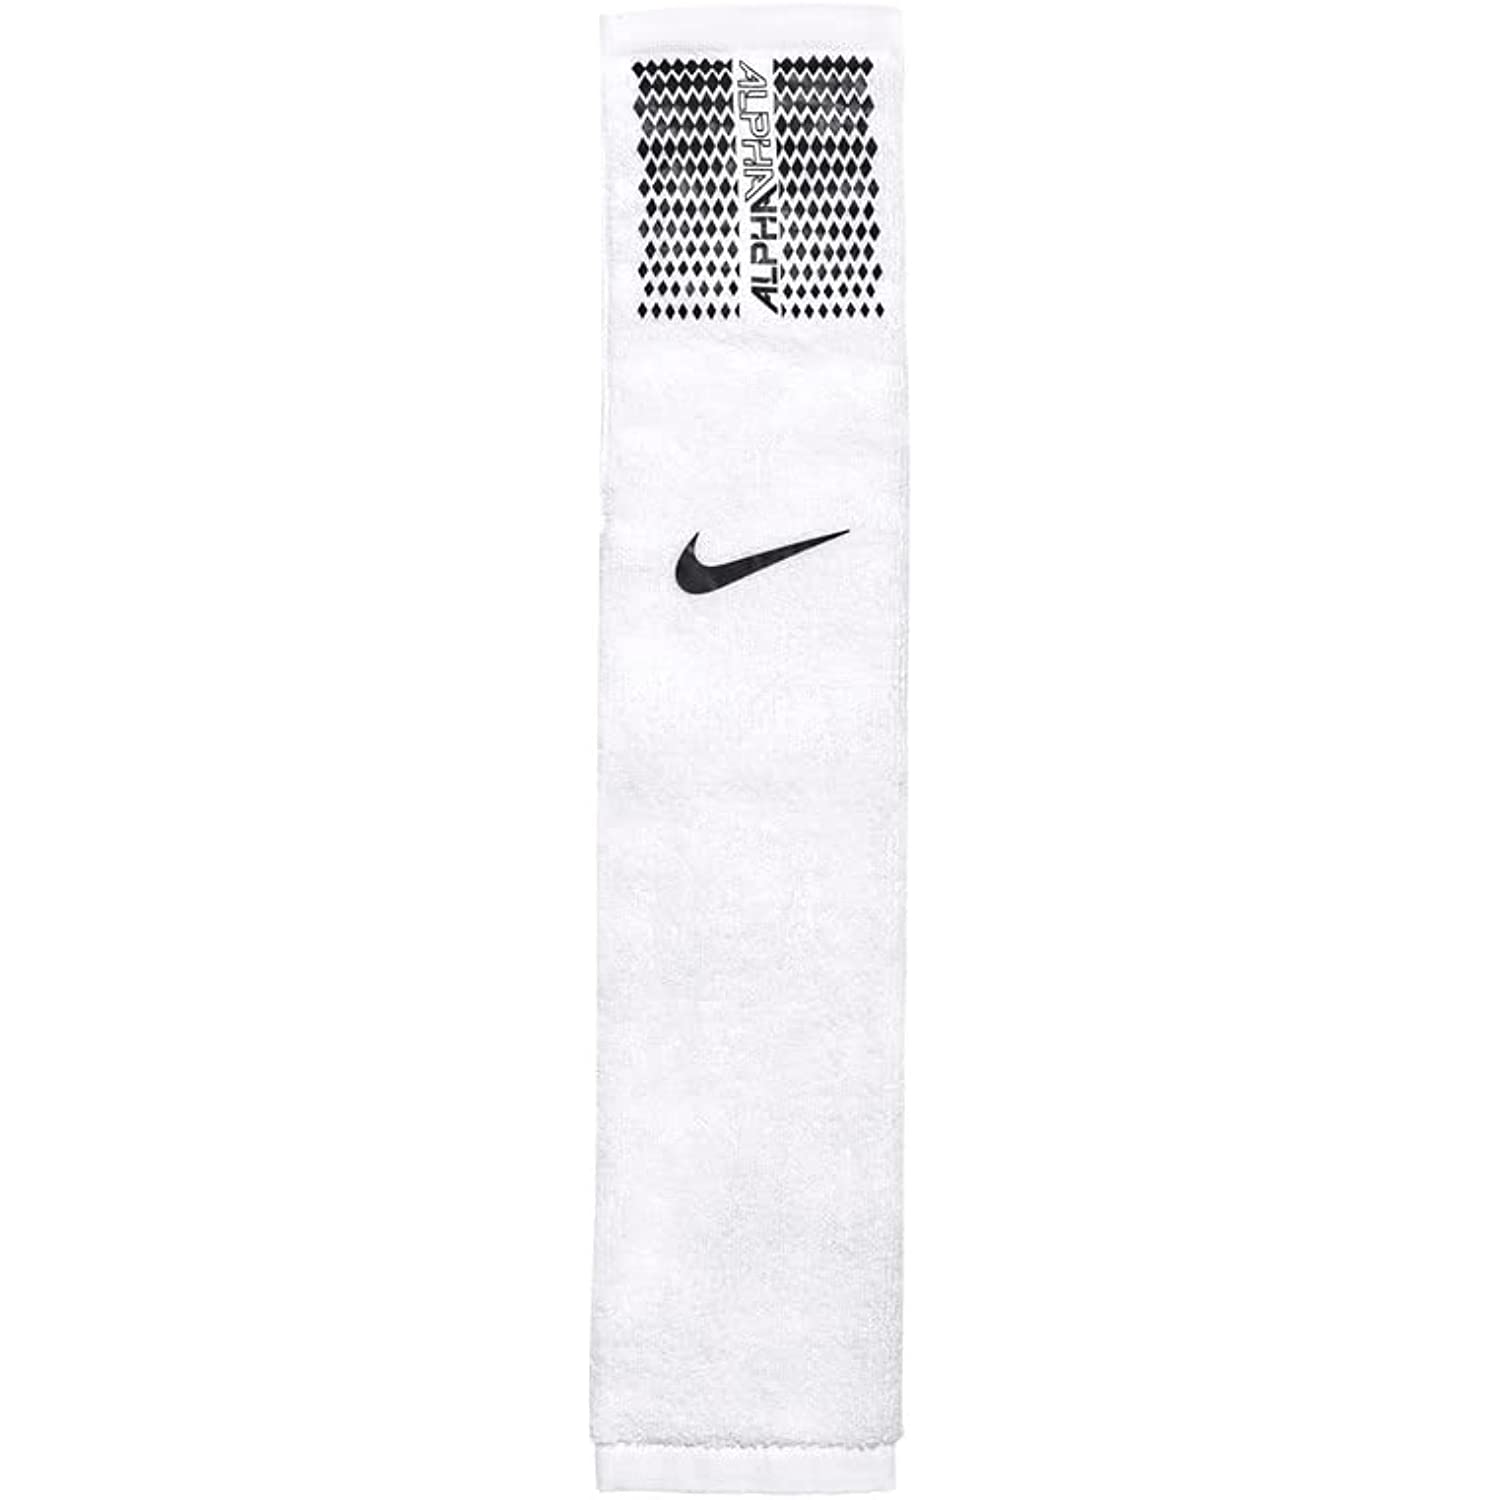 Nike Football Towel, White Alpha - image 1 of 2